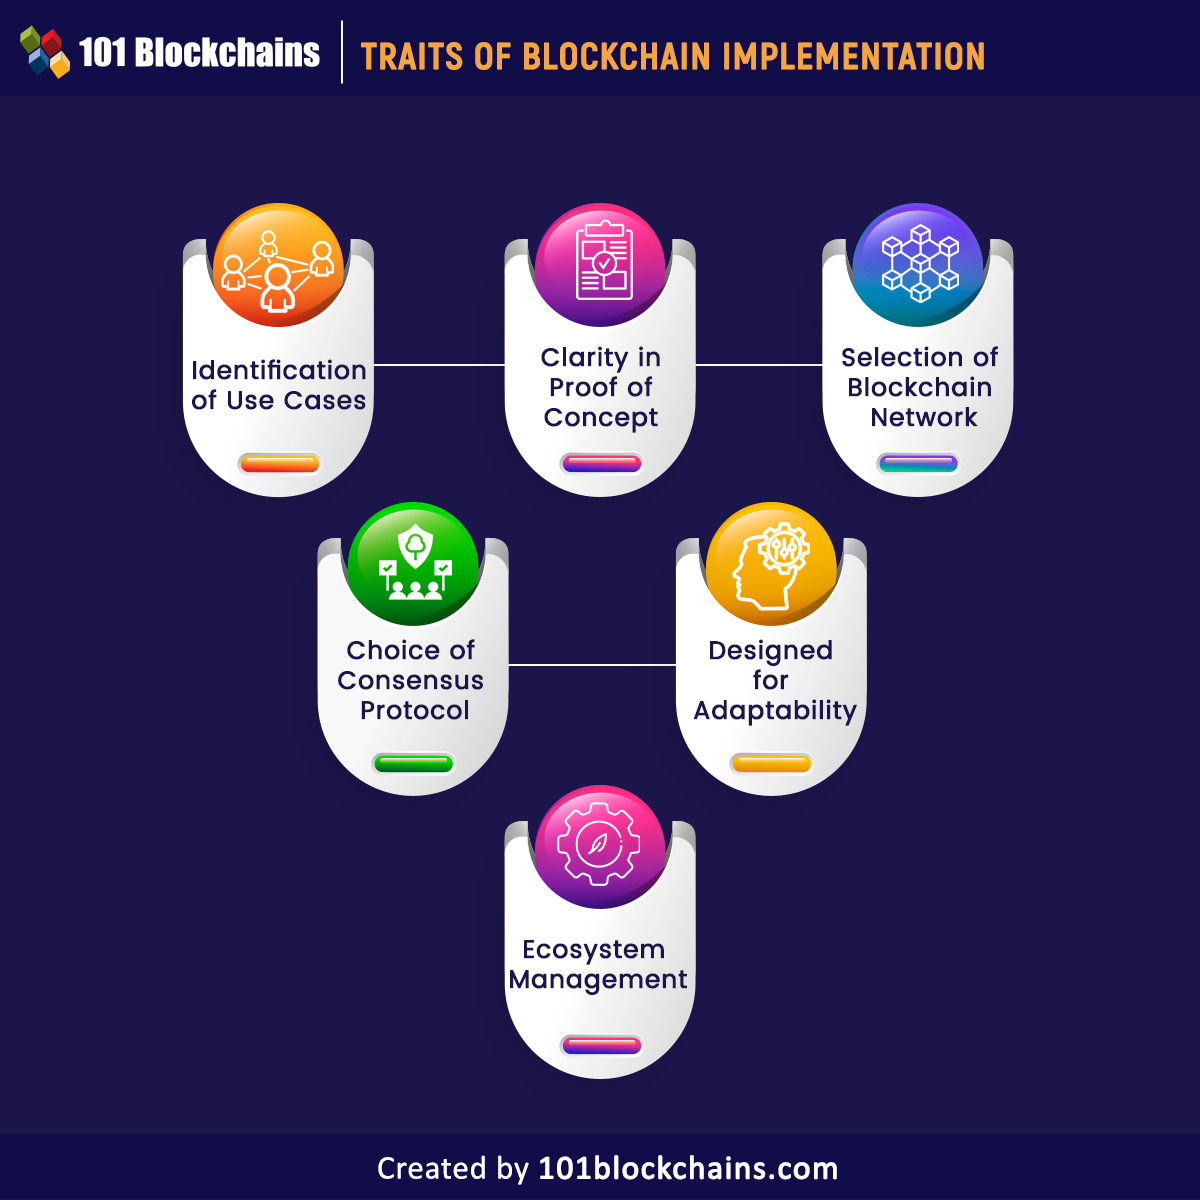 Traits of Blockchain Implementation